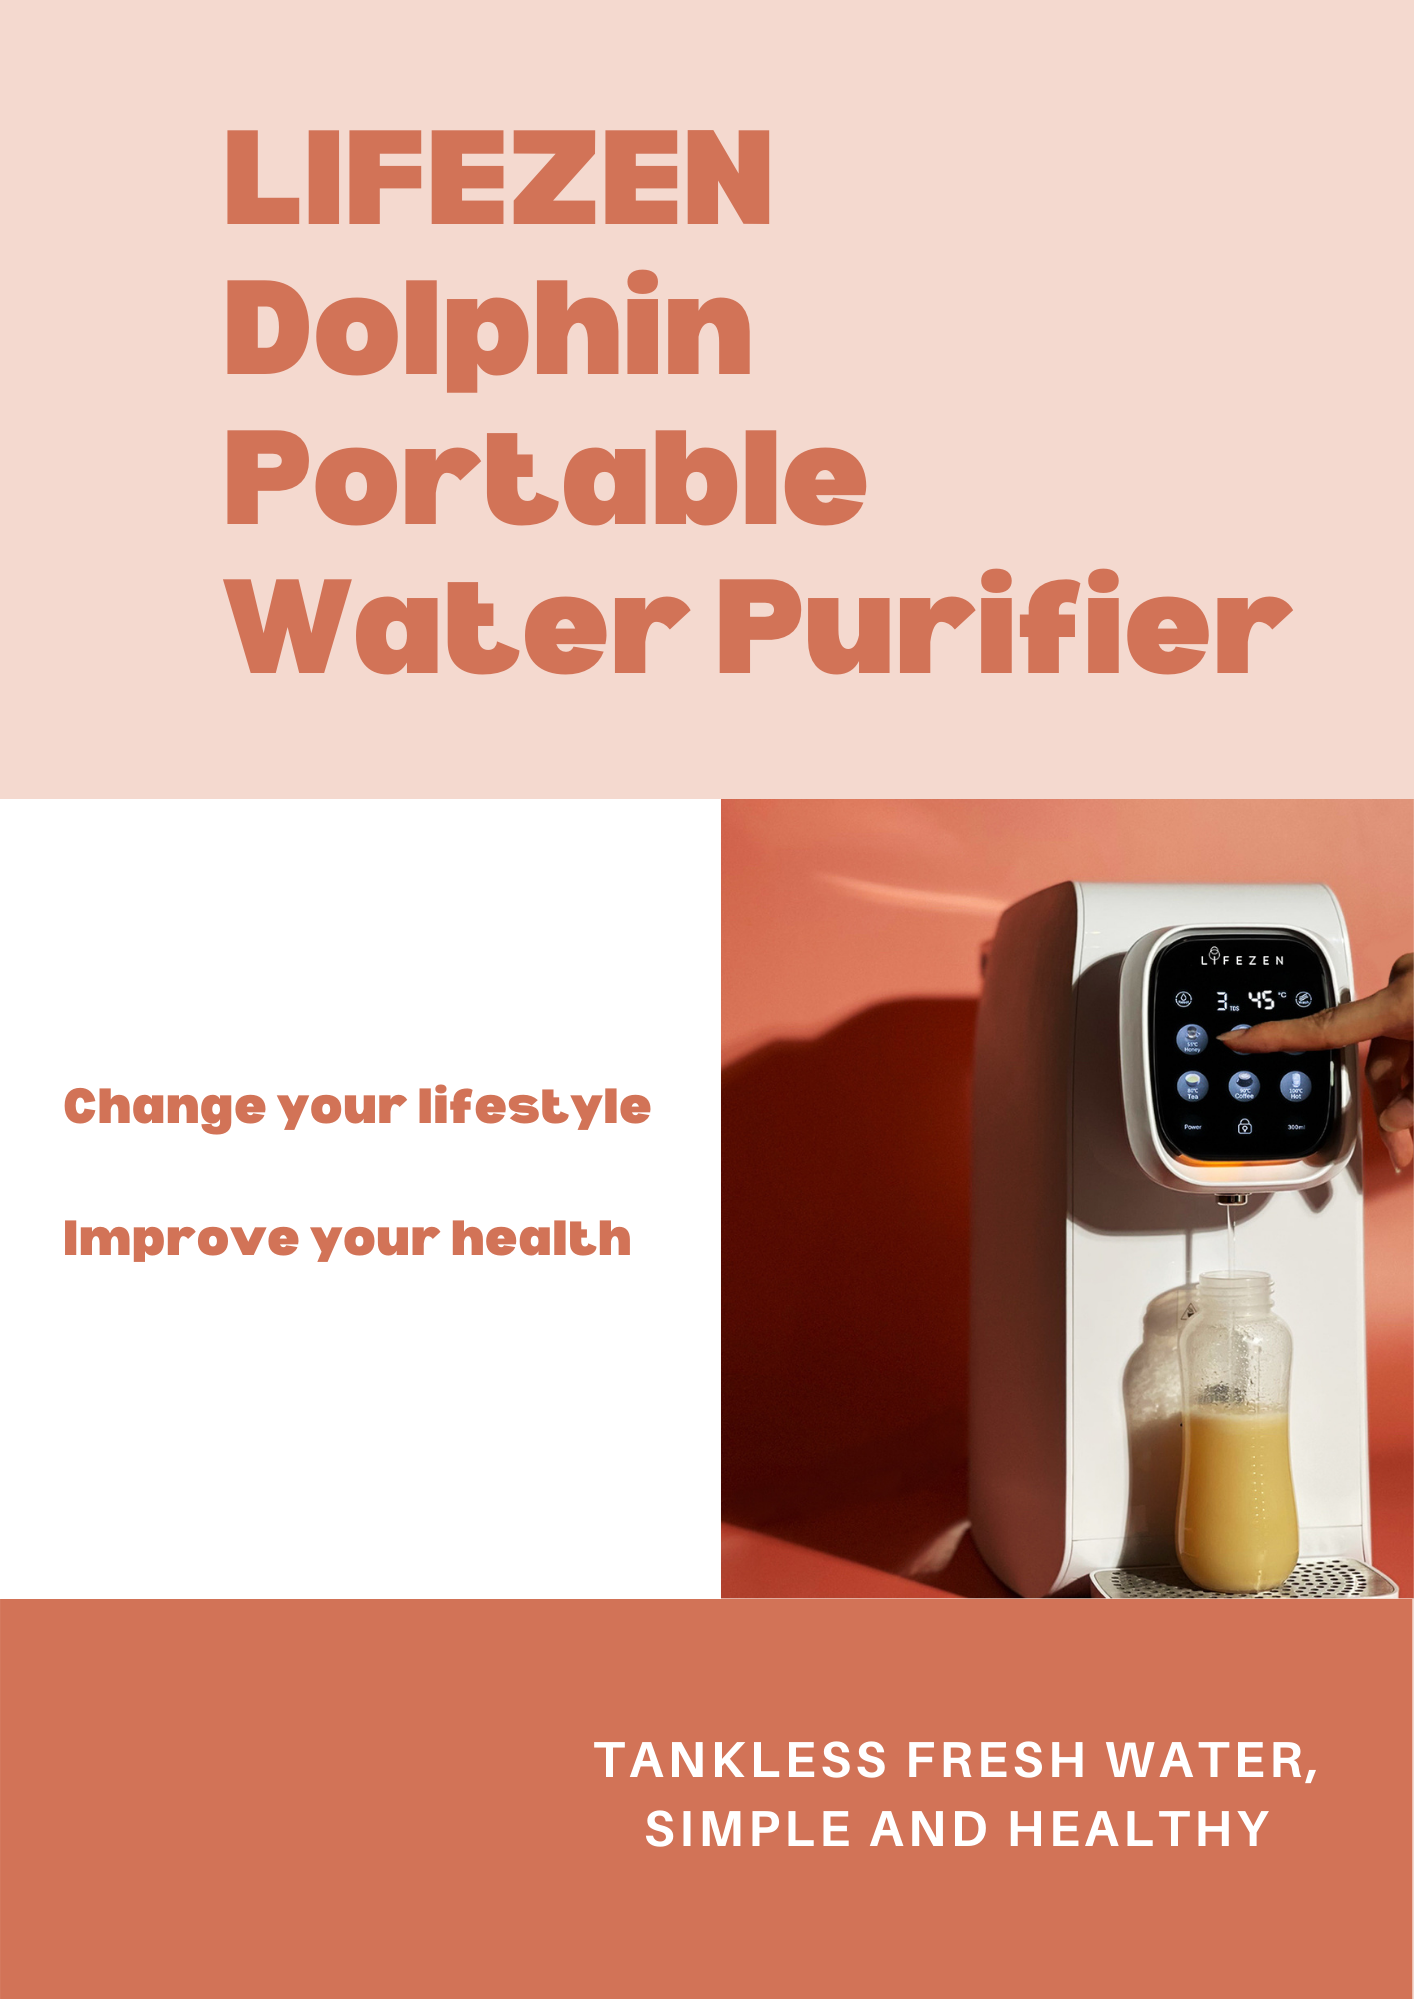 Lifezen Dolphin Portable Water Purifier